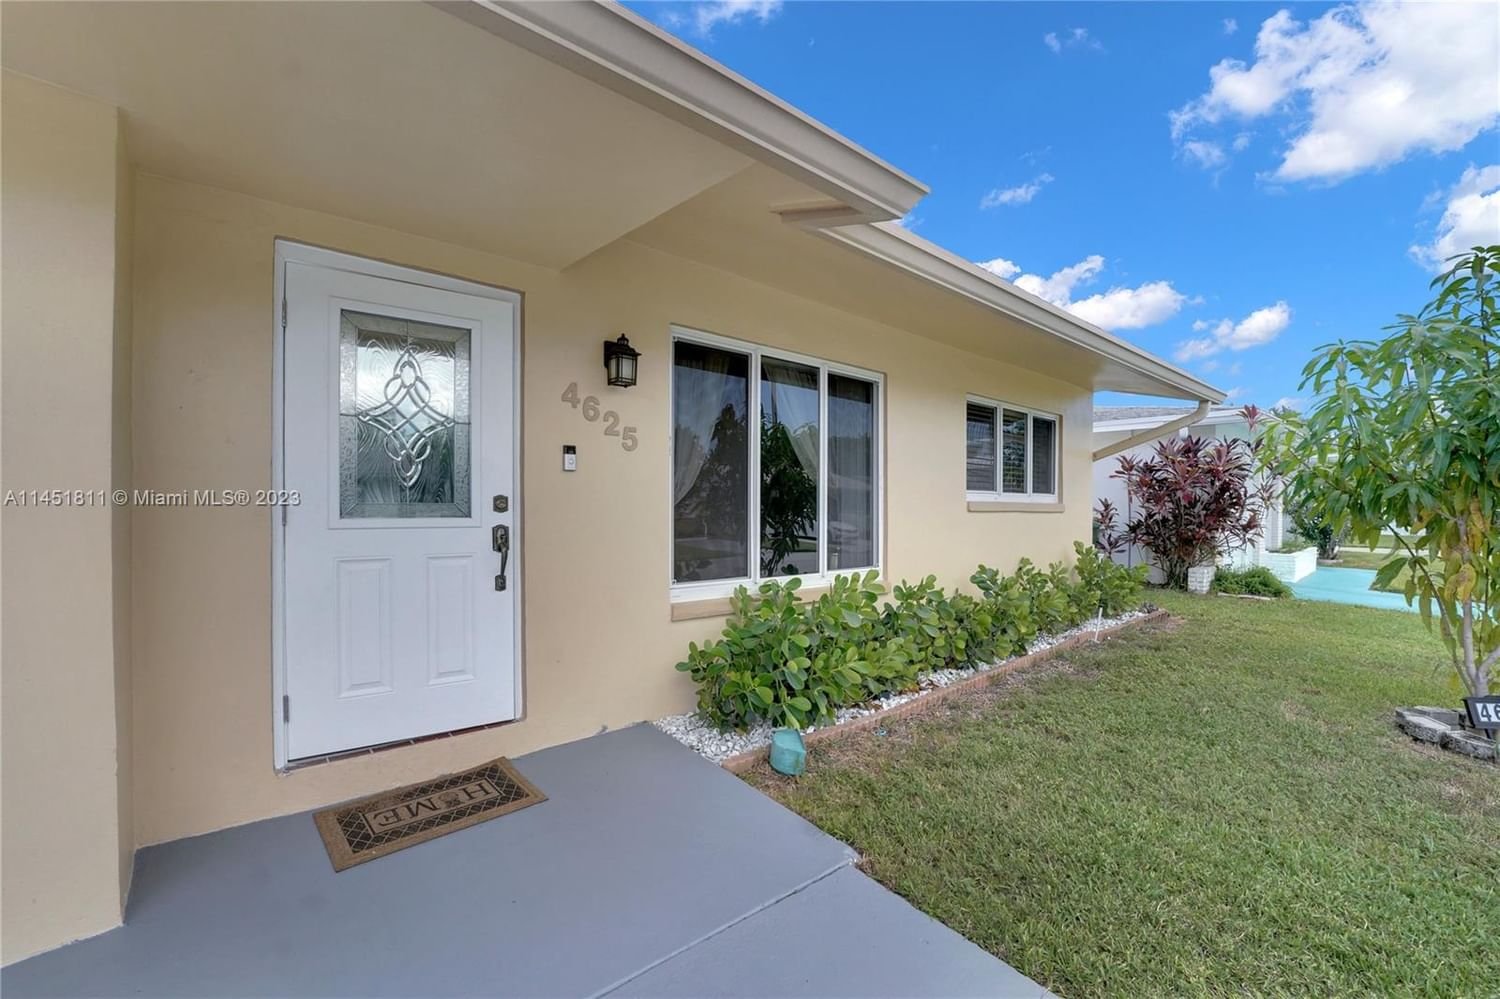 Real estate property located at 4625 44th St, Broward County, Tamarac, FL